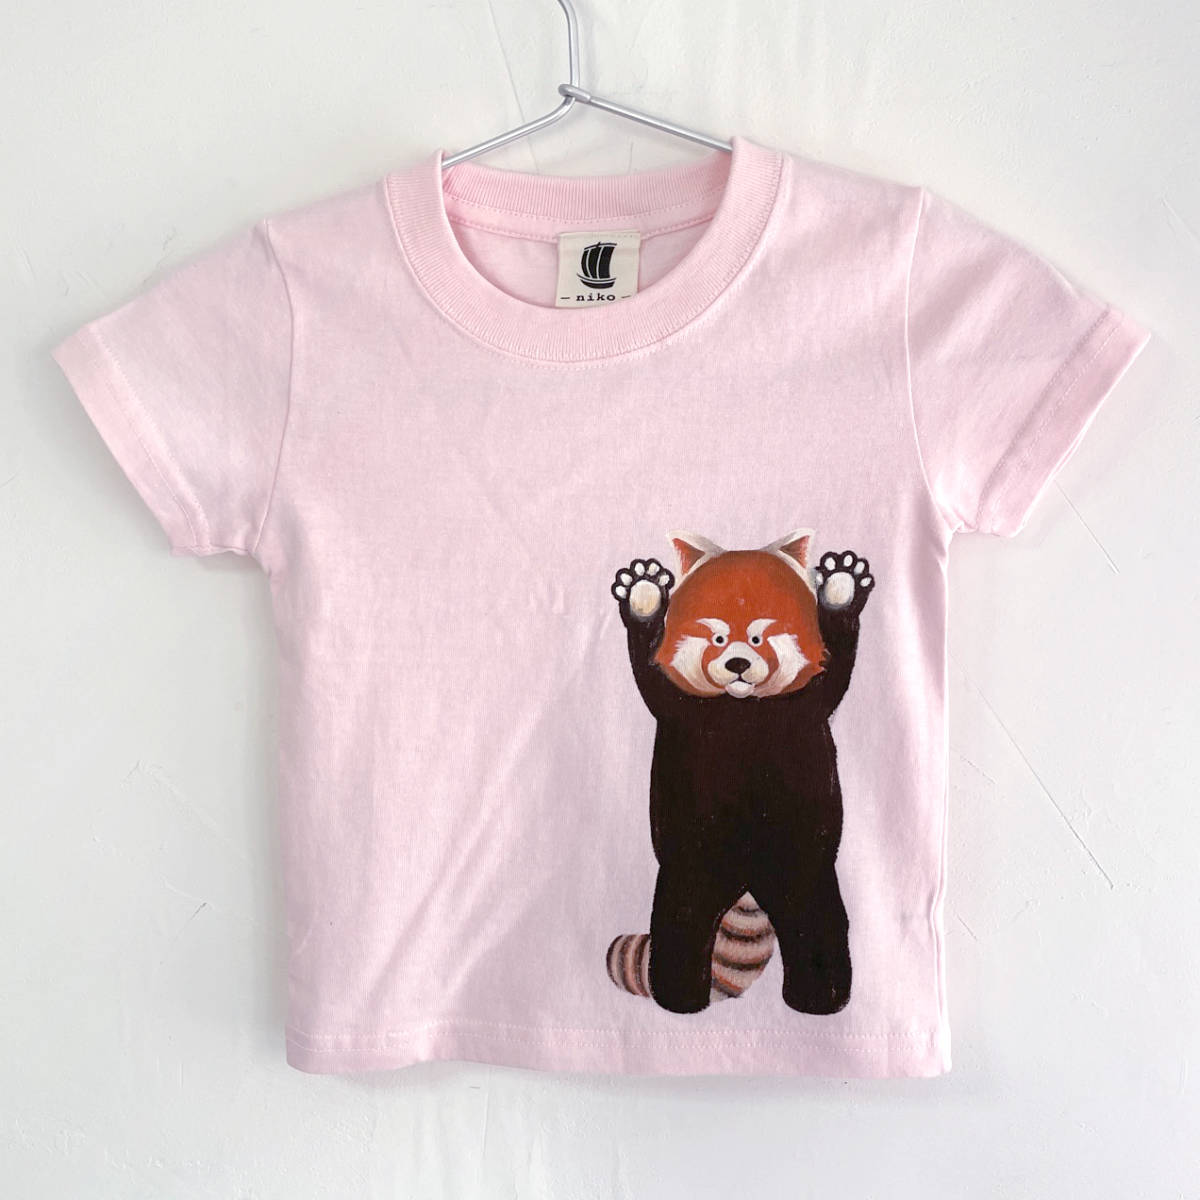 Kids T-shirt, size 100, pink, red panda print T-shirt, white, handmade, hand-painted T-shirt, tops, Short sleeve T-shirt, 100(95~104cm)